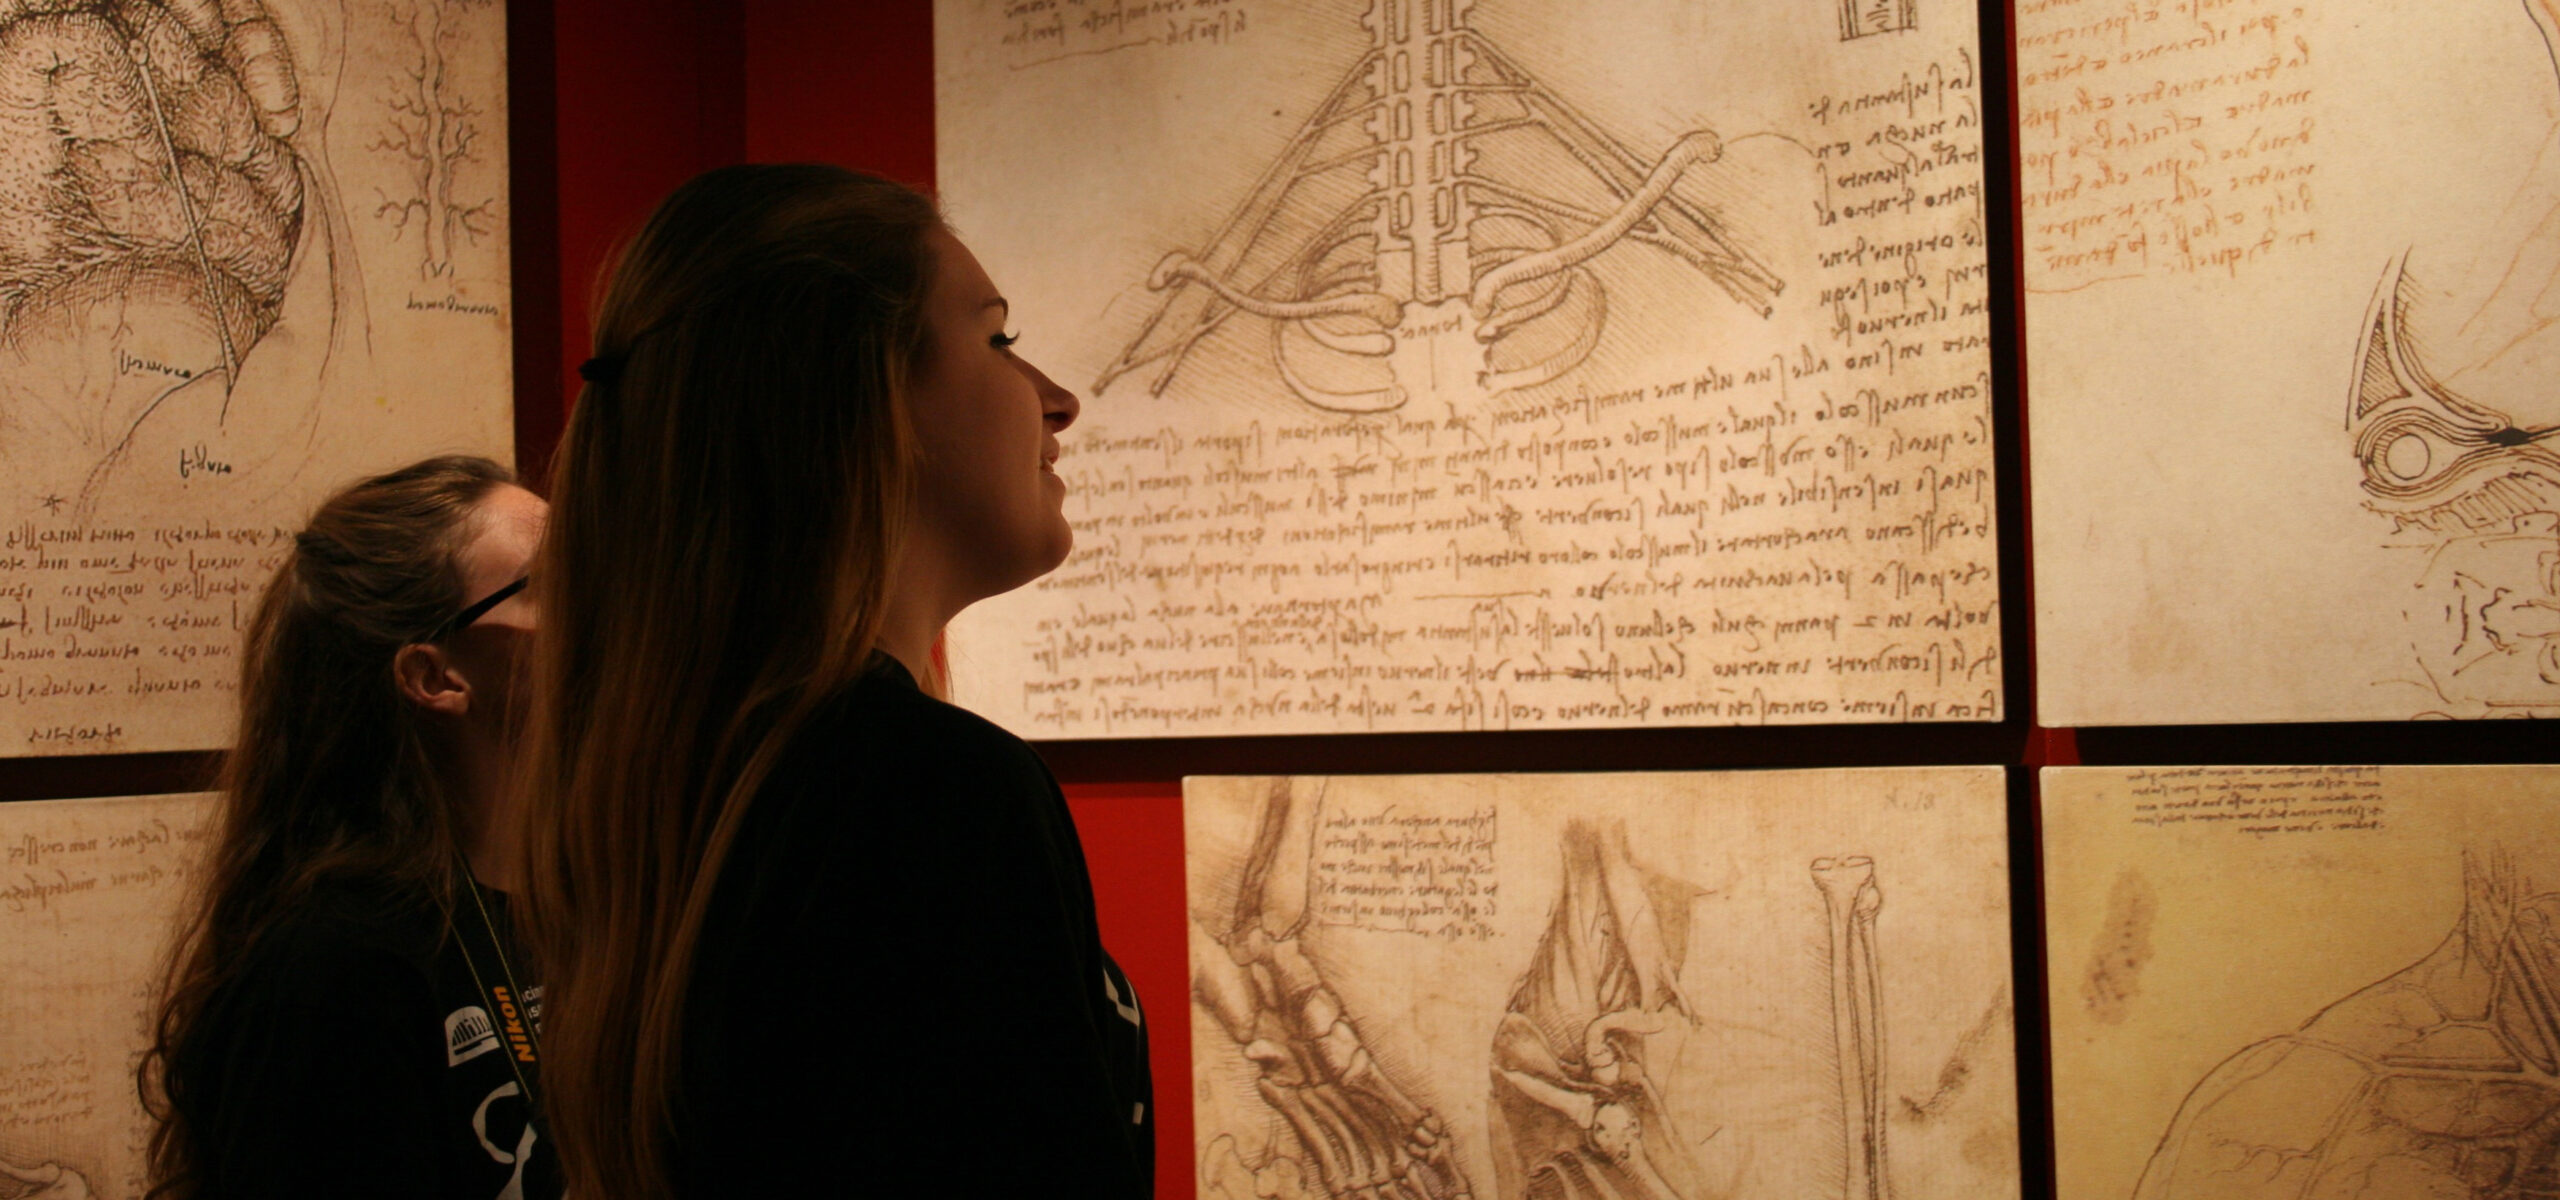 Patrons viewing exhibit of Da Vinci's drawings.